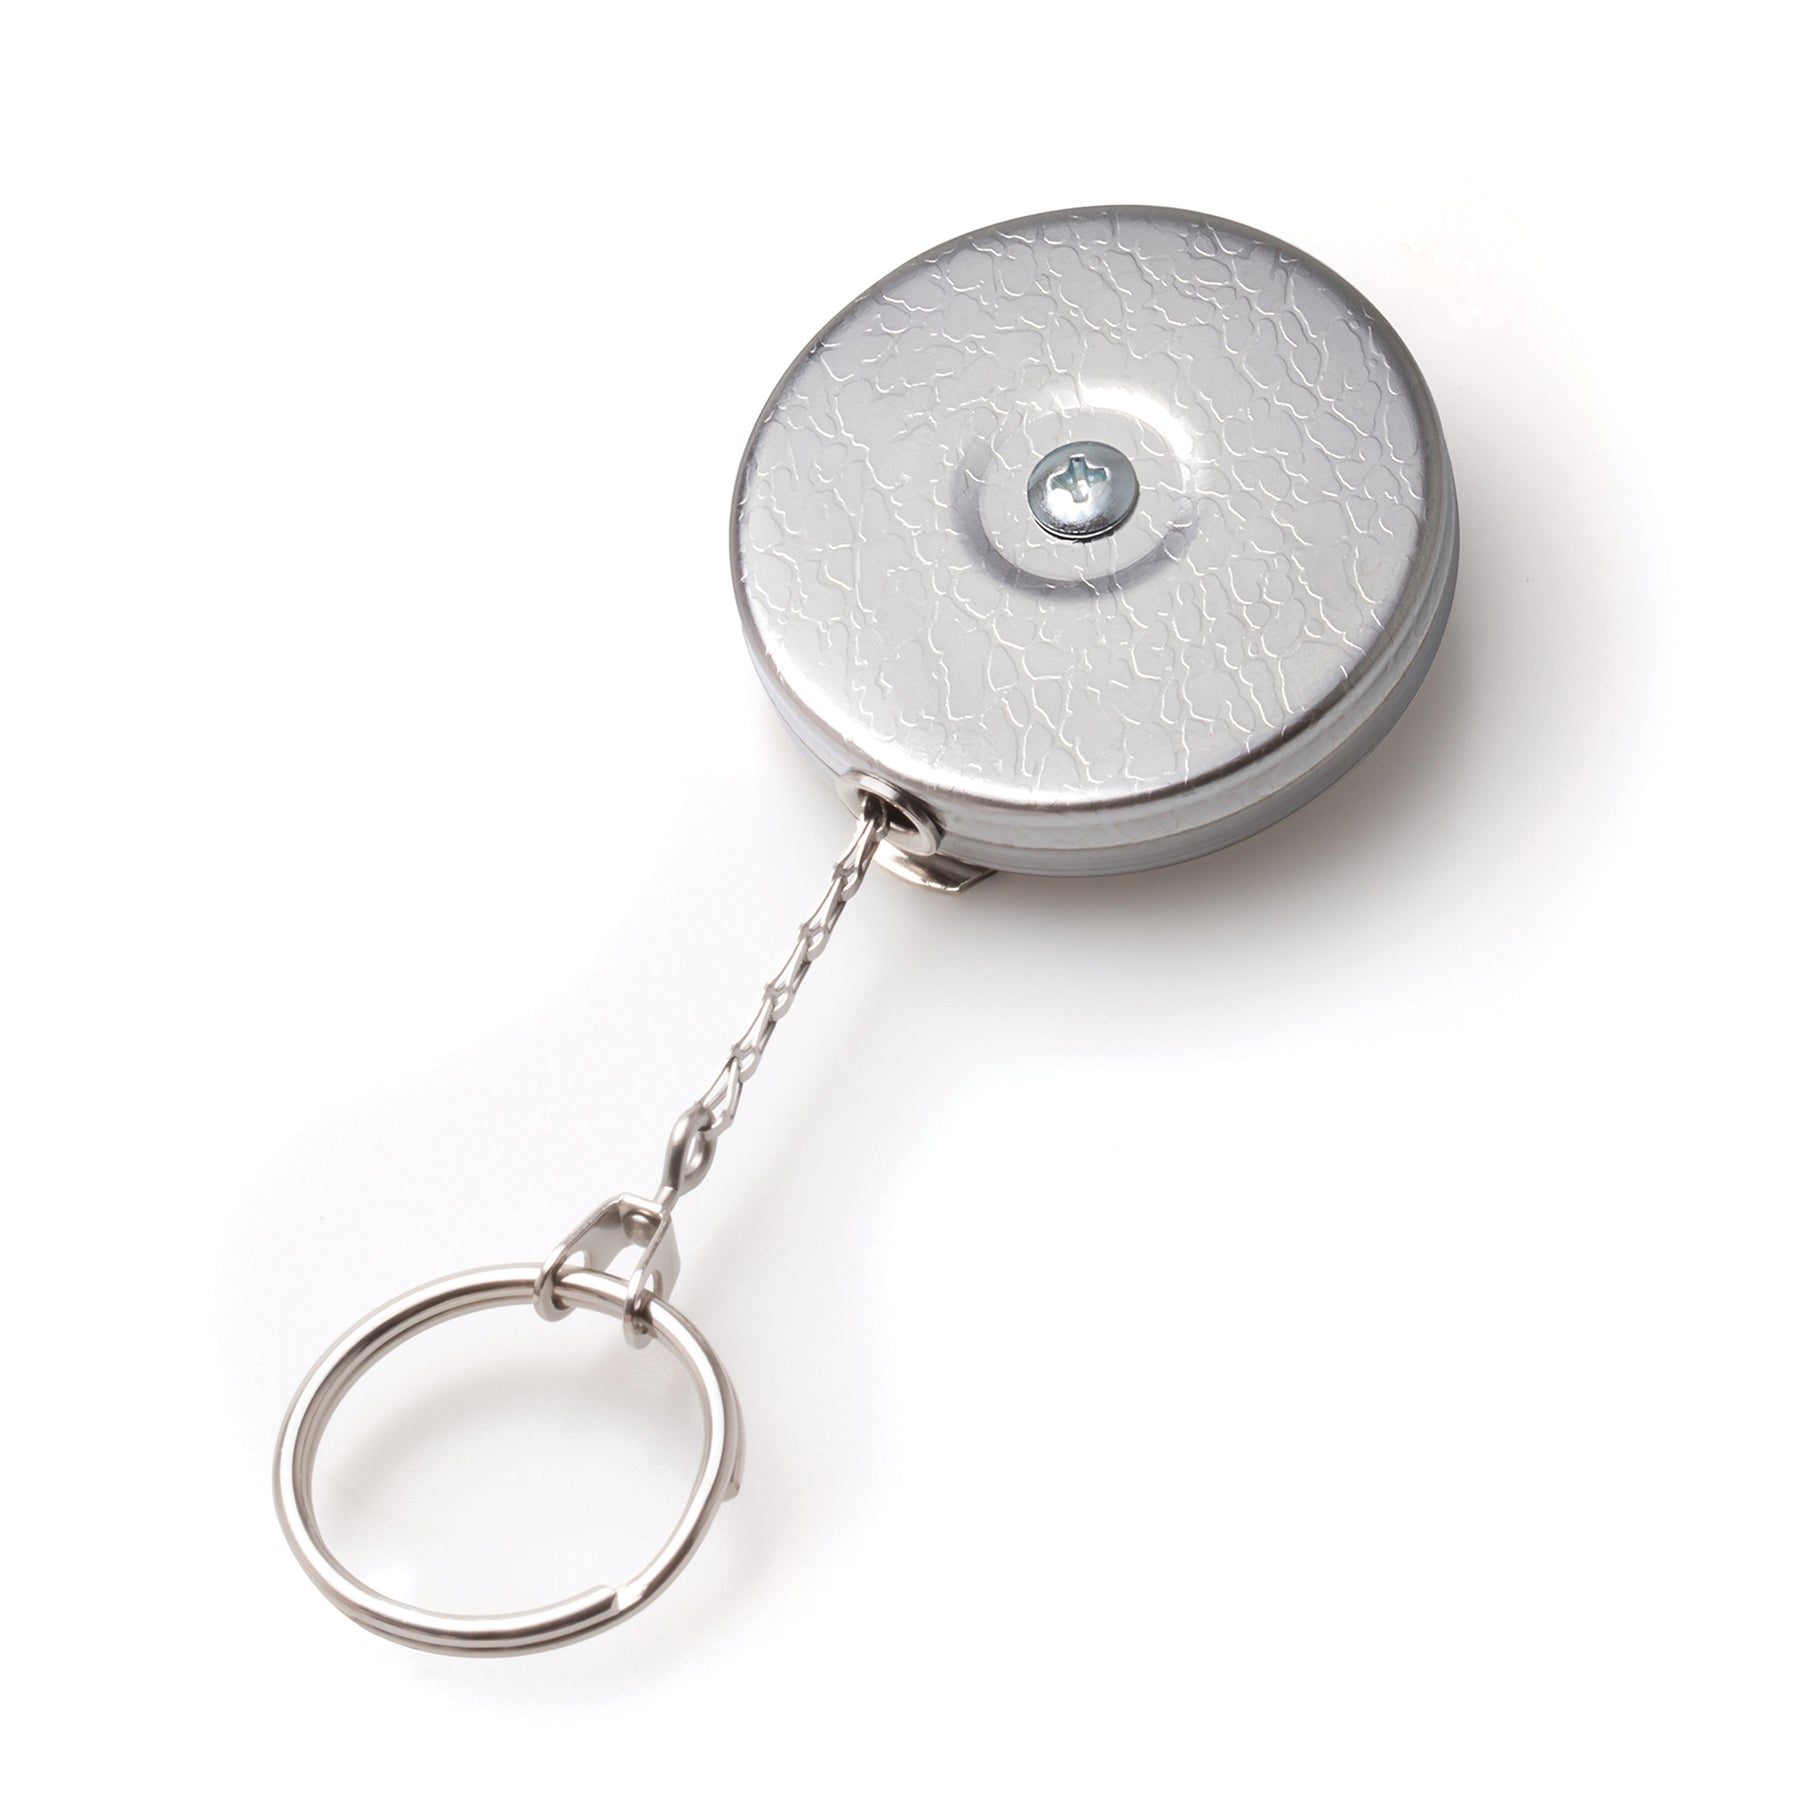 Wholesale keychain,20 Pieces